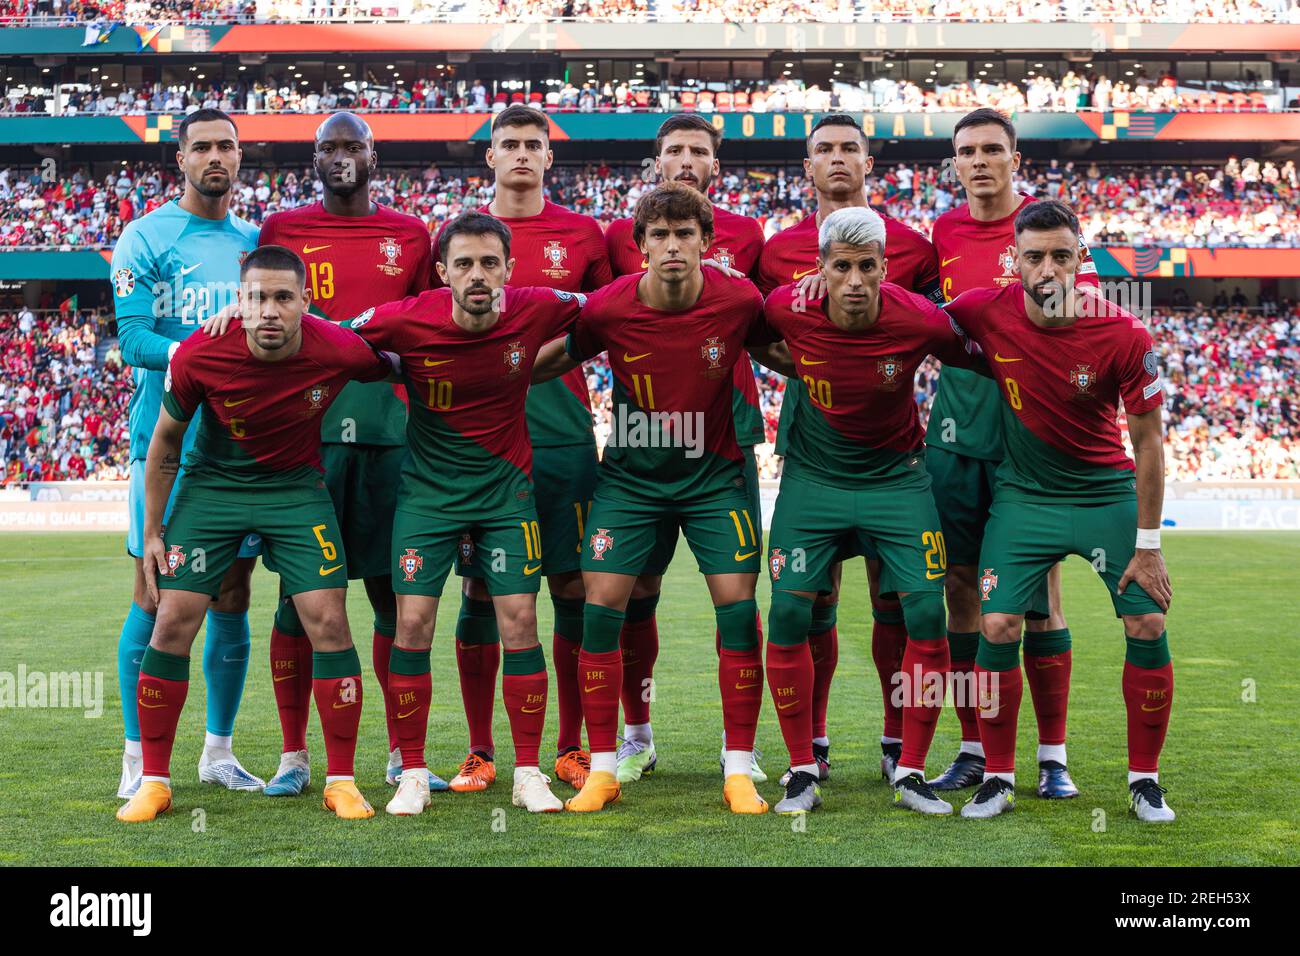 11374412 - UEFA EURO 2024 qualification - Portugal national team  presserSearch